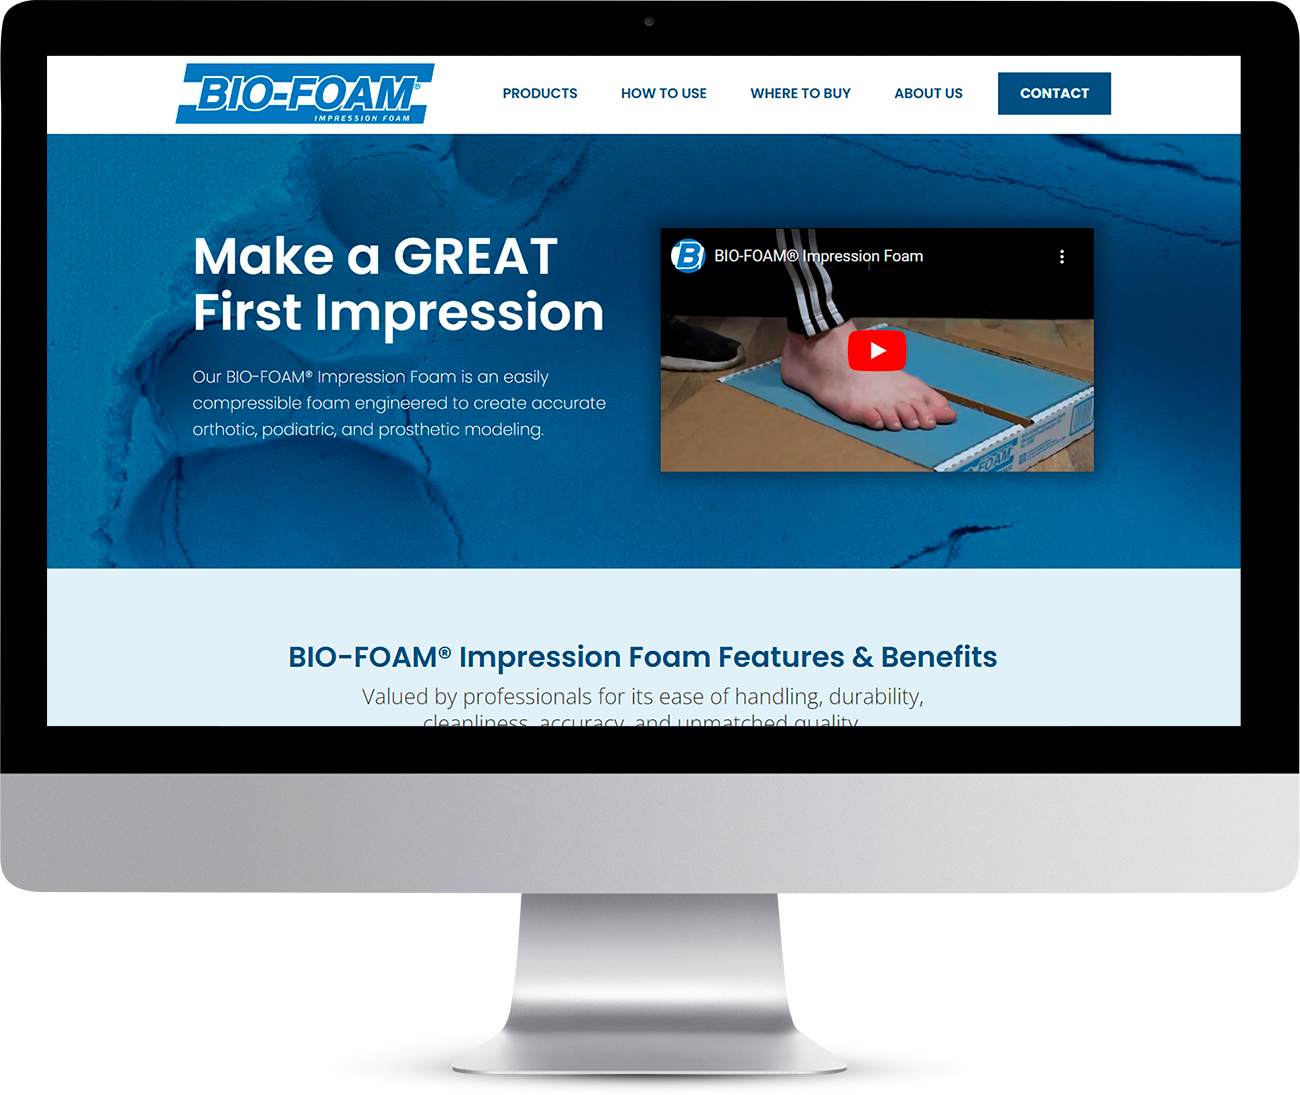 Bio-Foam’s B2B website design on a computer monitor.